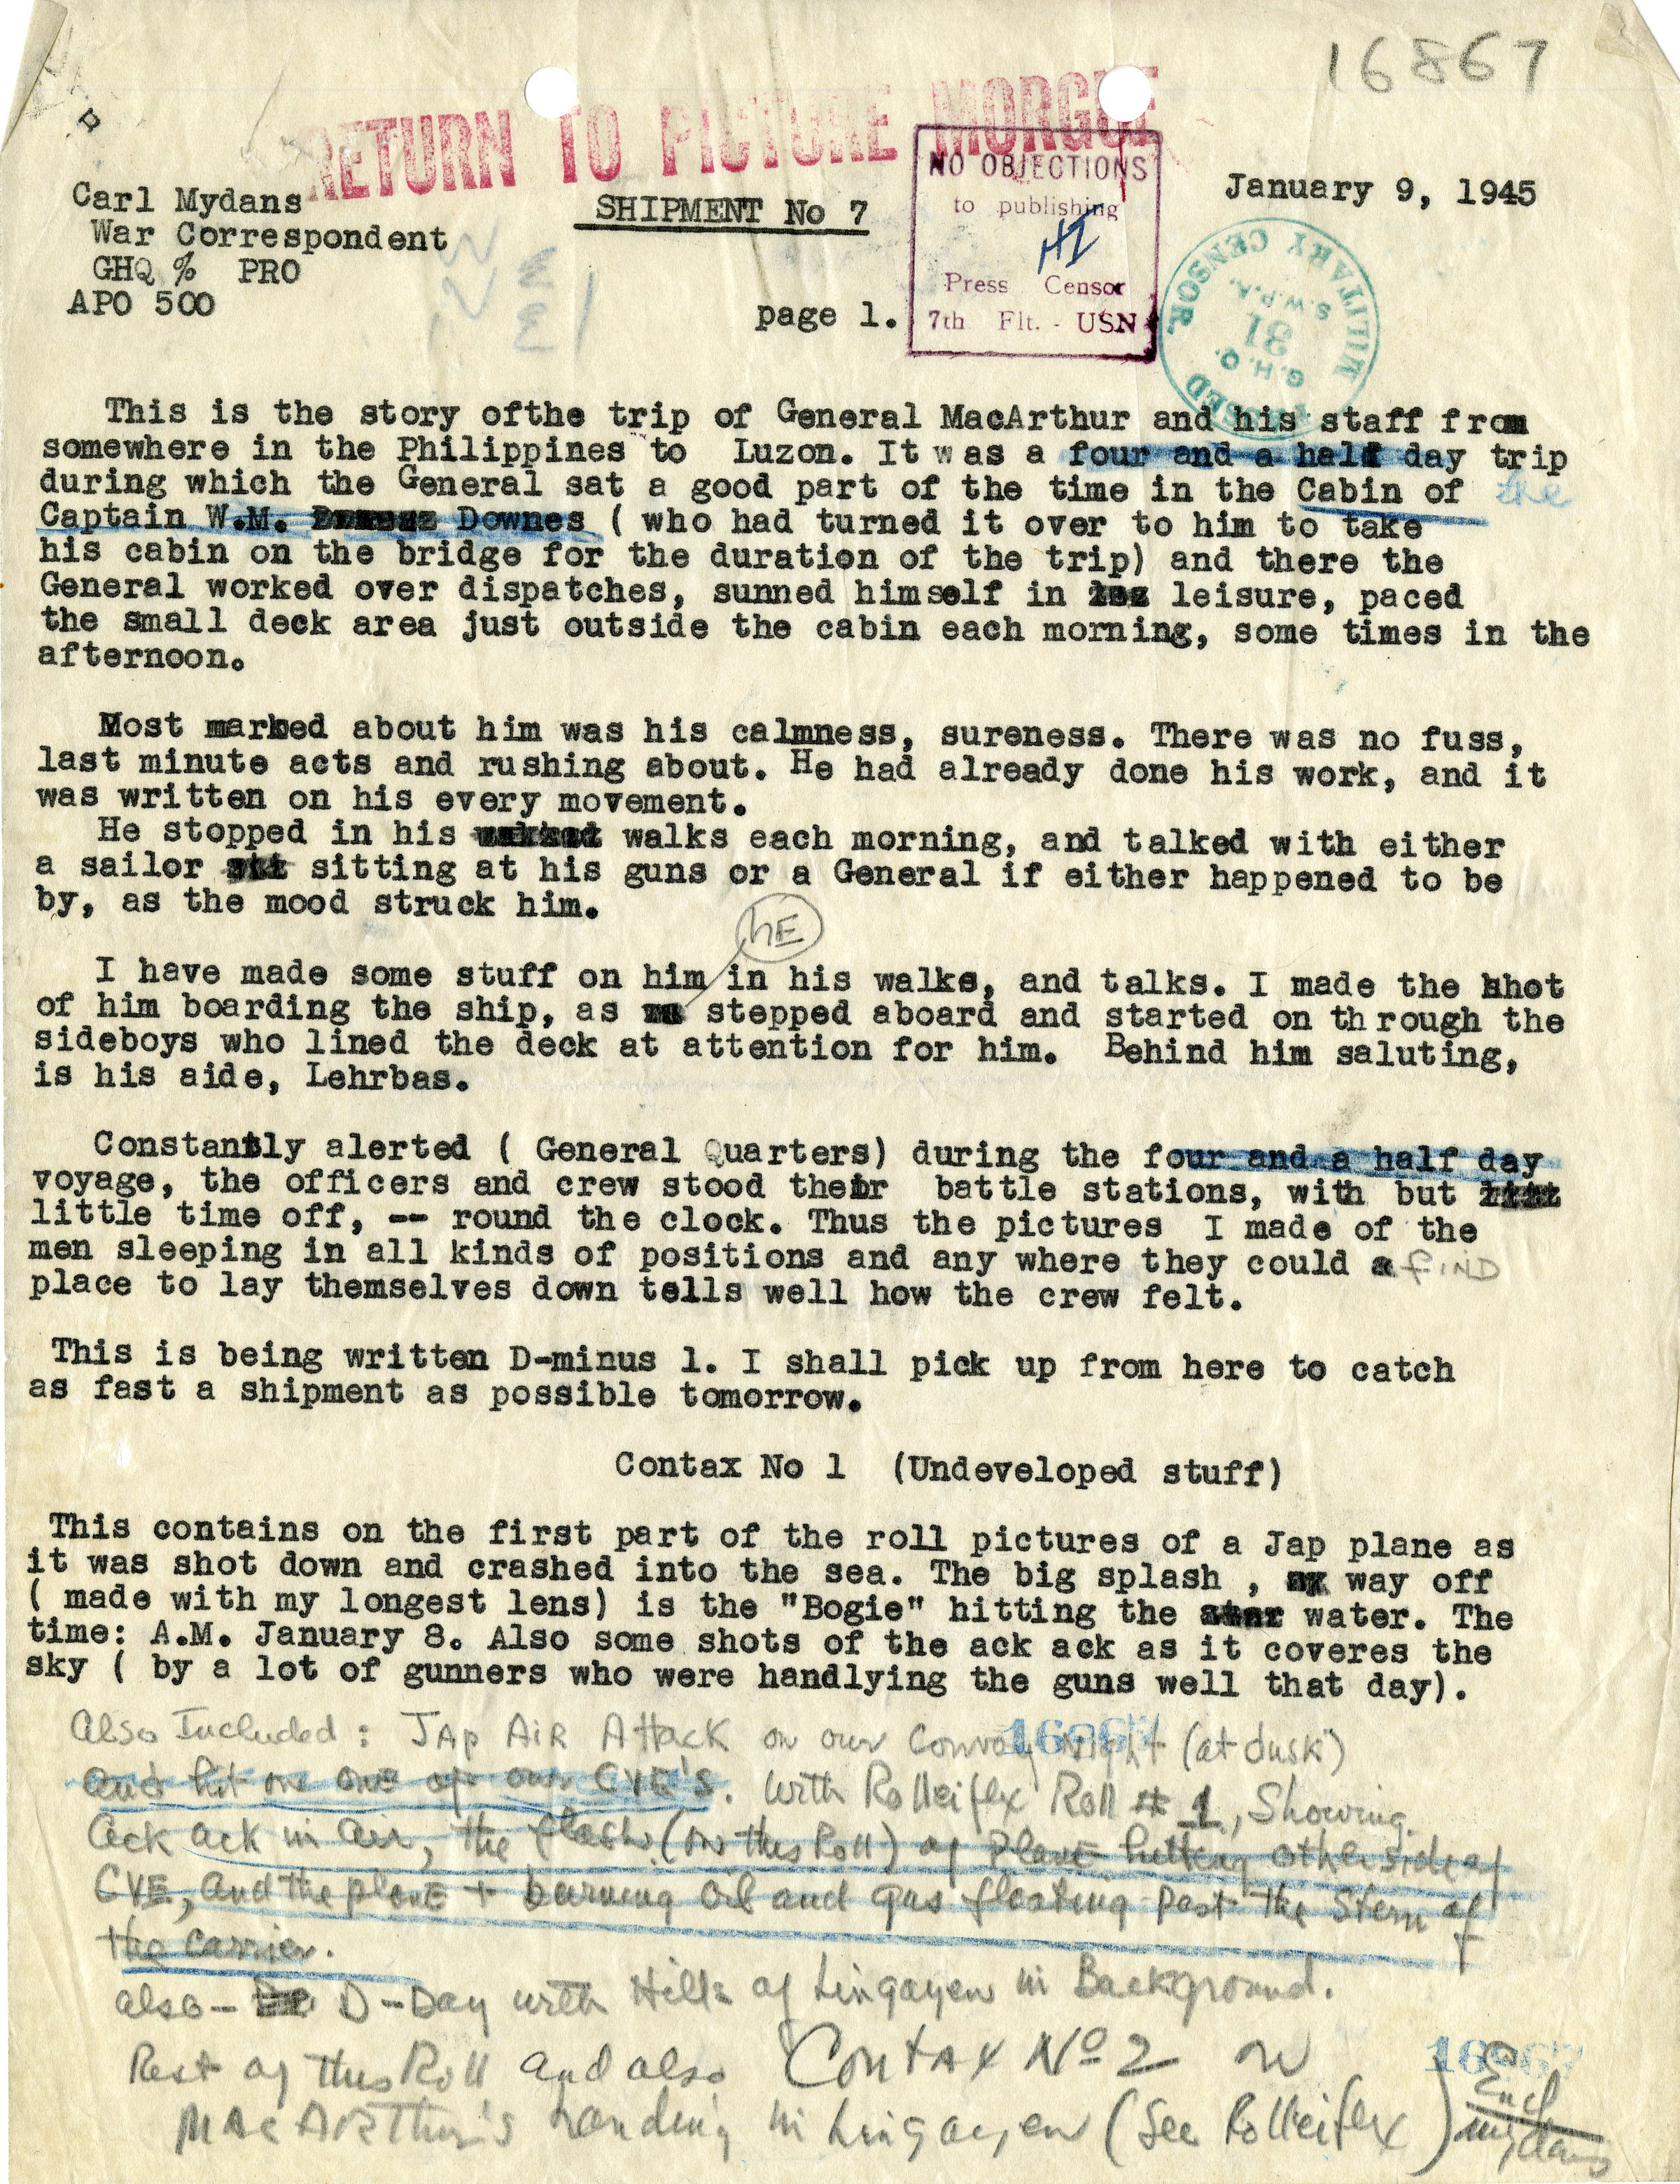 Carl Mydans' typed and handwritten notes, jan. 9, 1945.